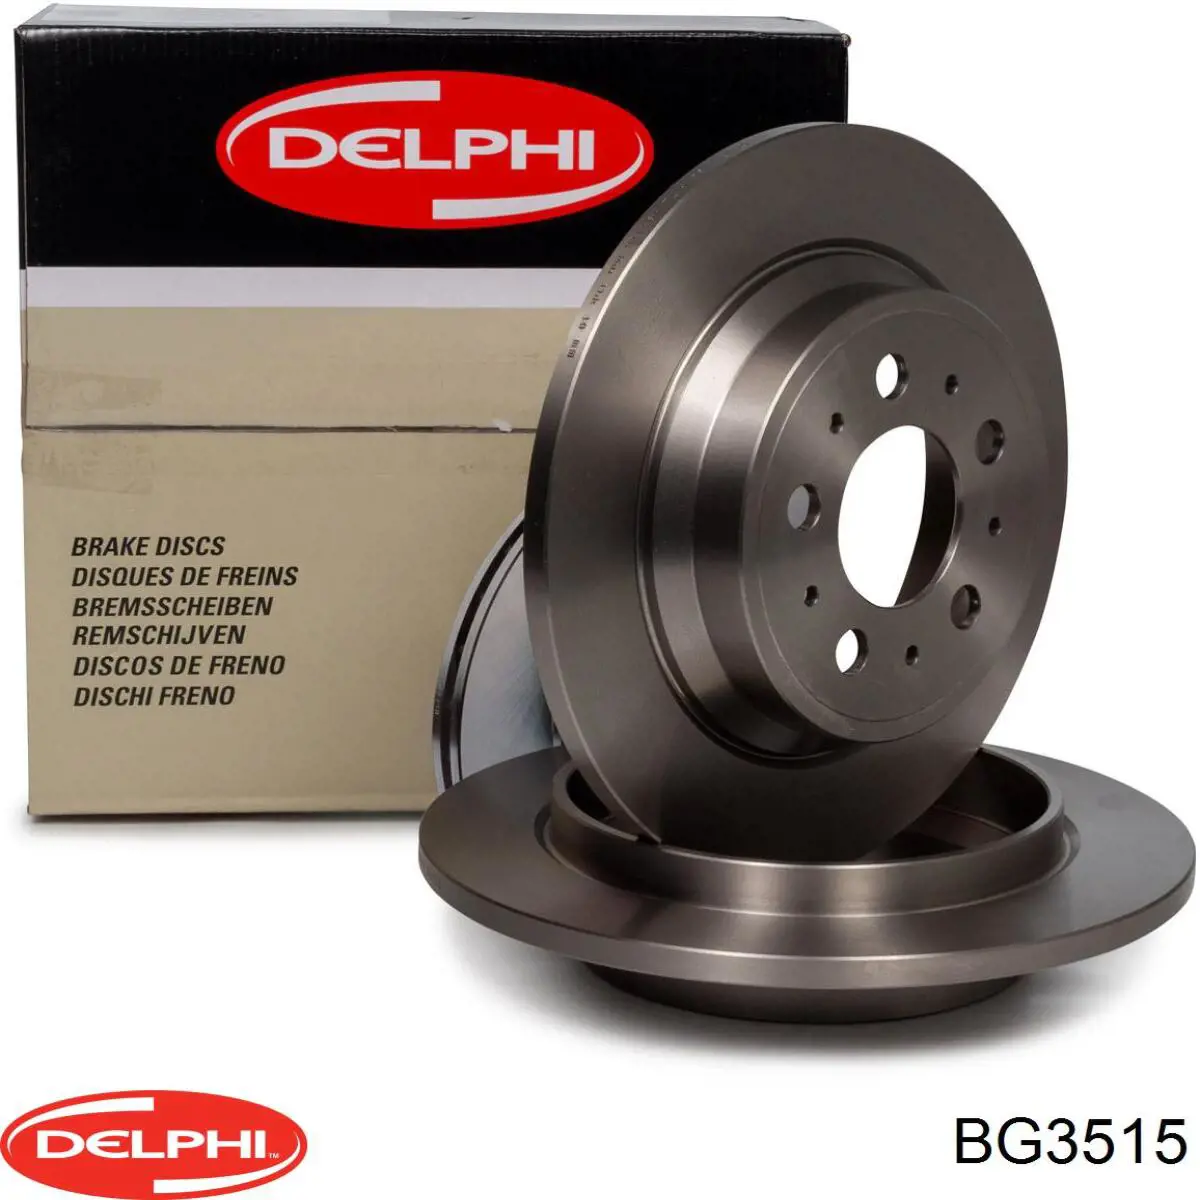 BG3515 Delphi disco do freio traseiro